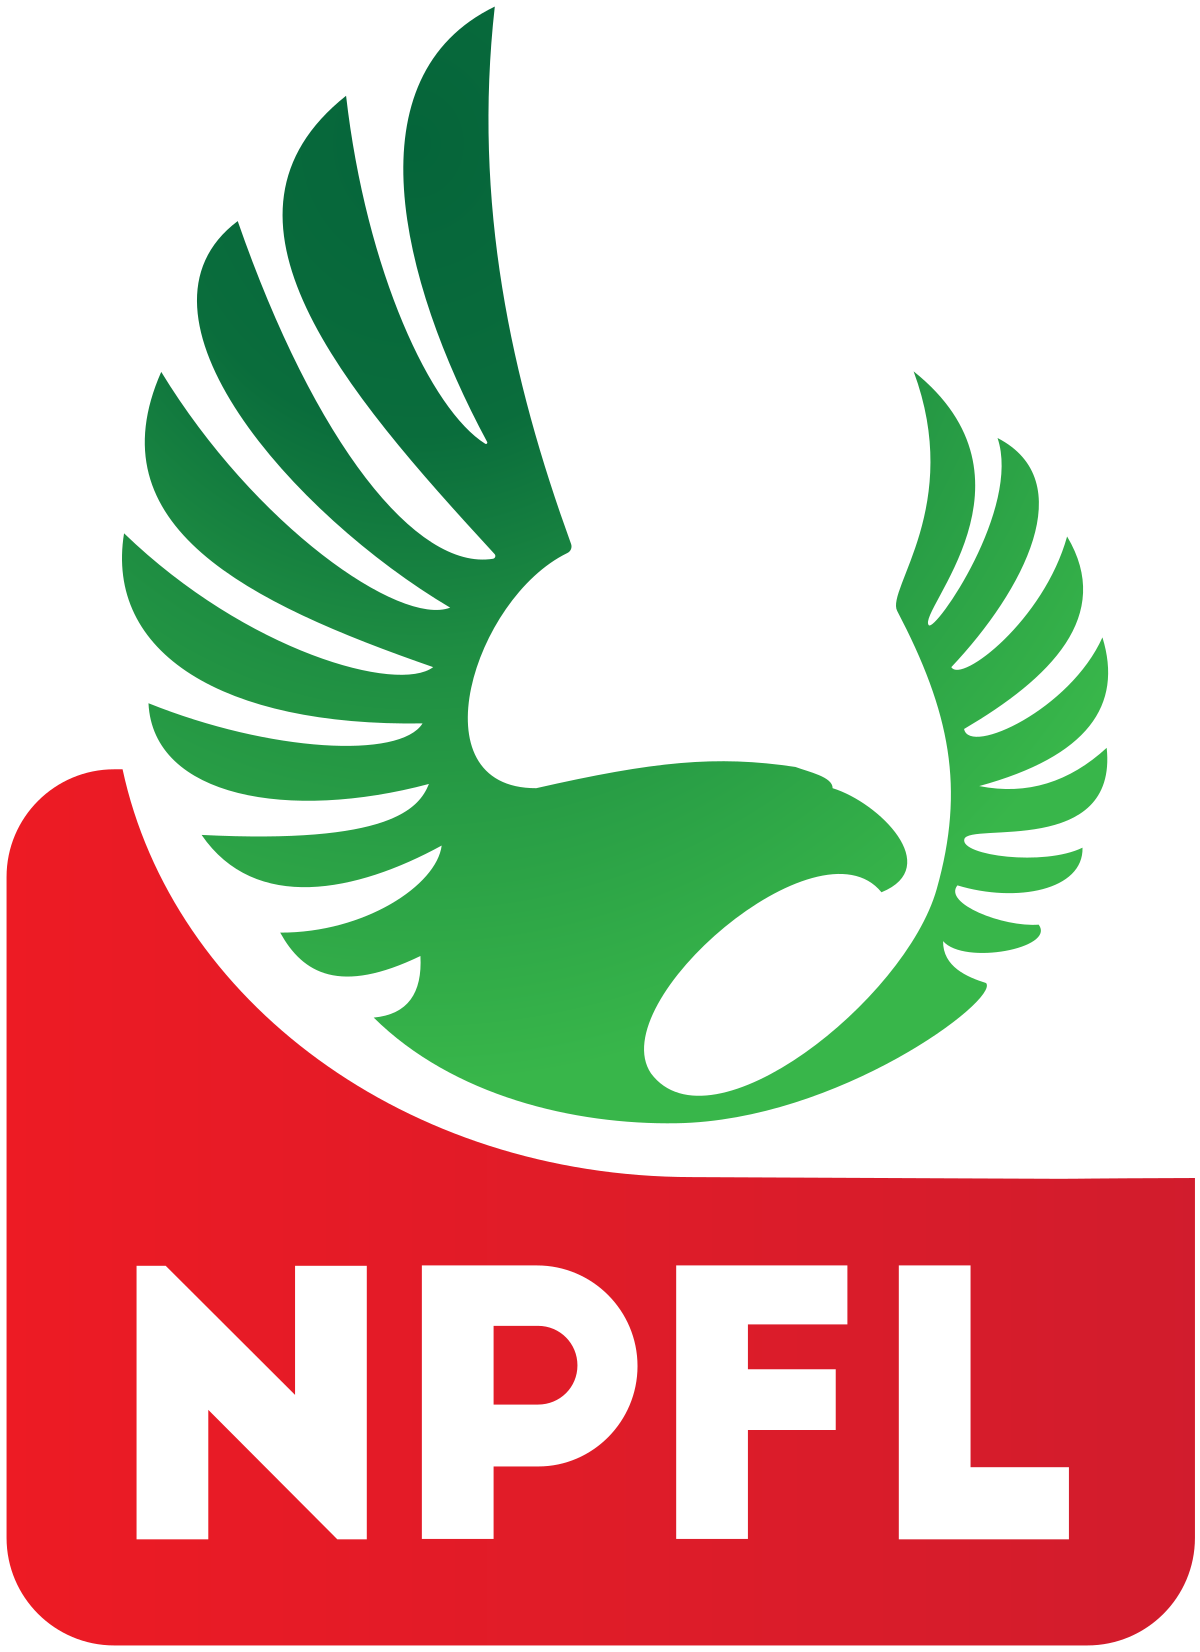  NPFL 2021/2022 to kick off December 17th